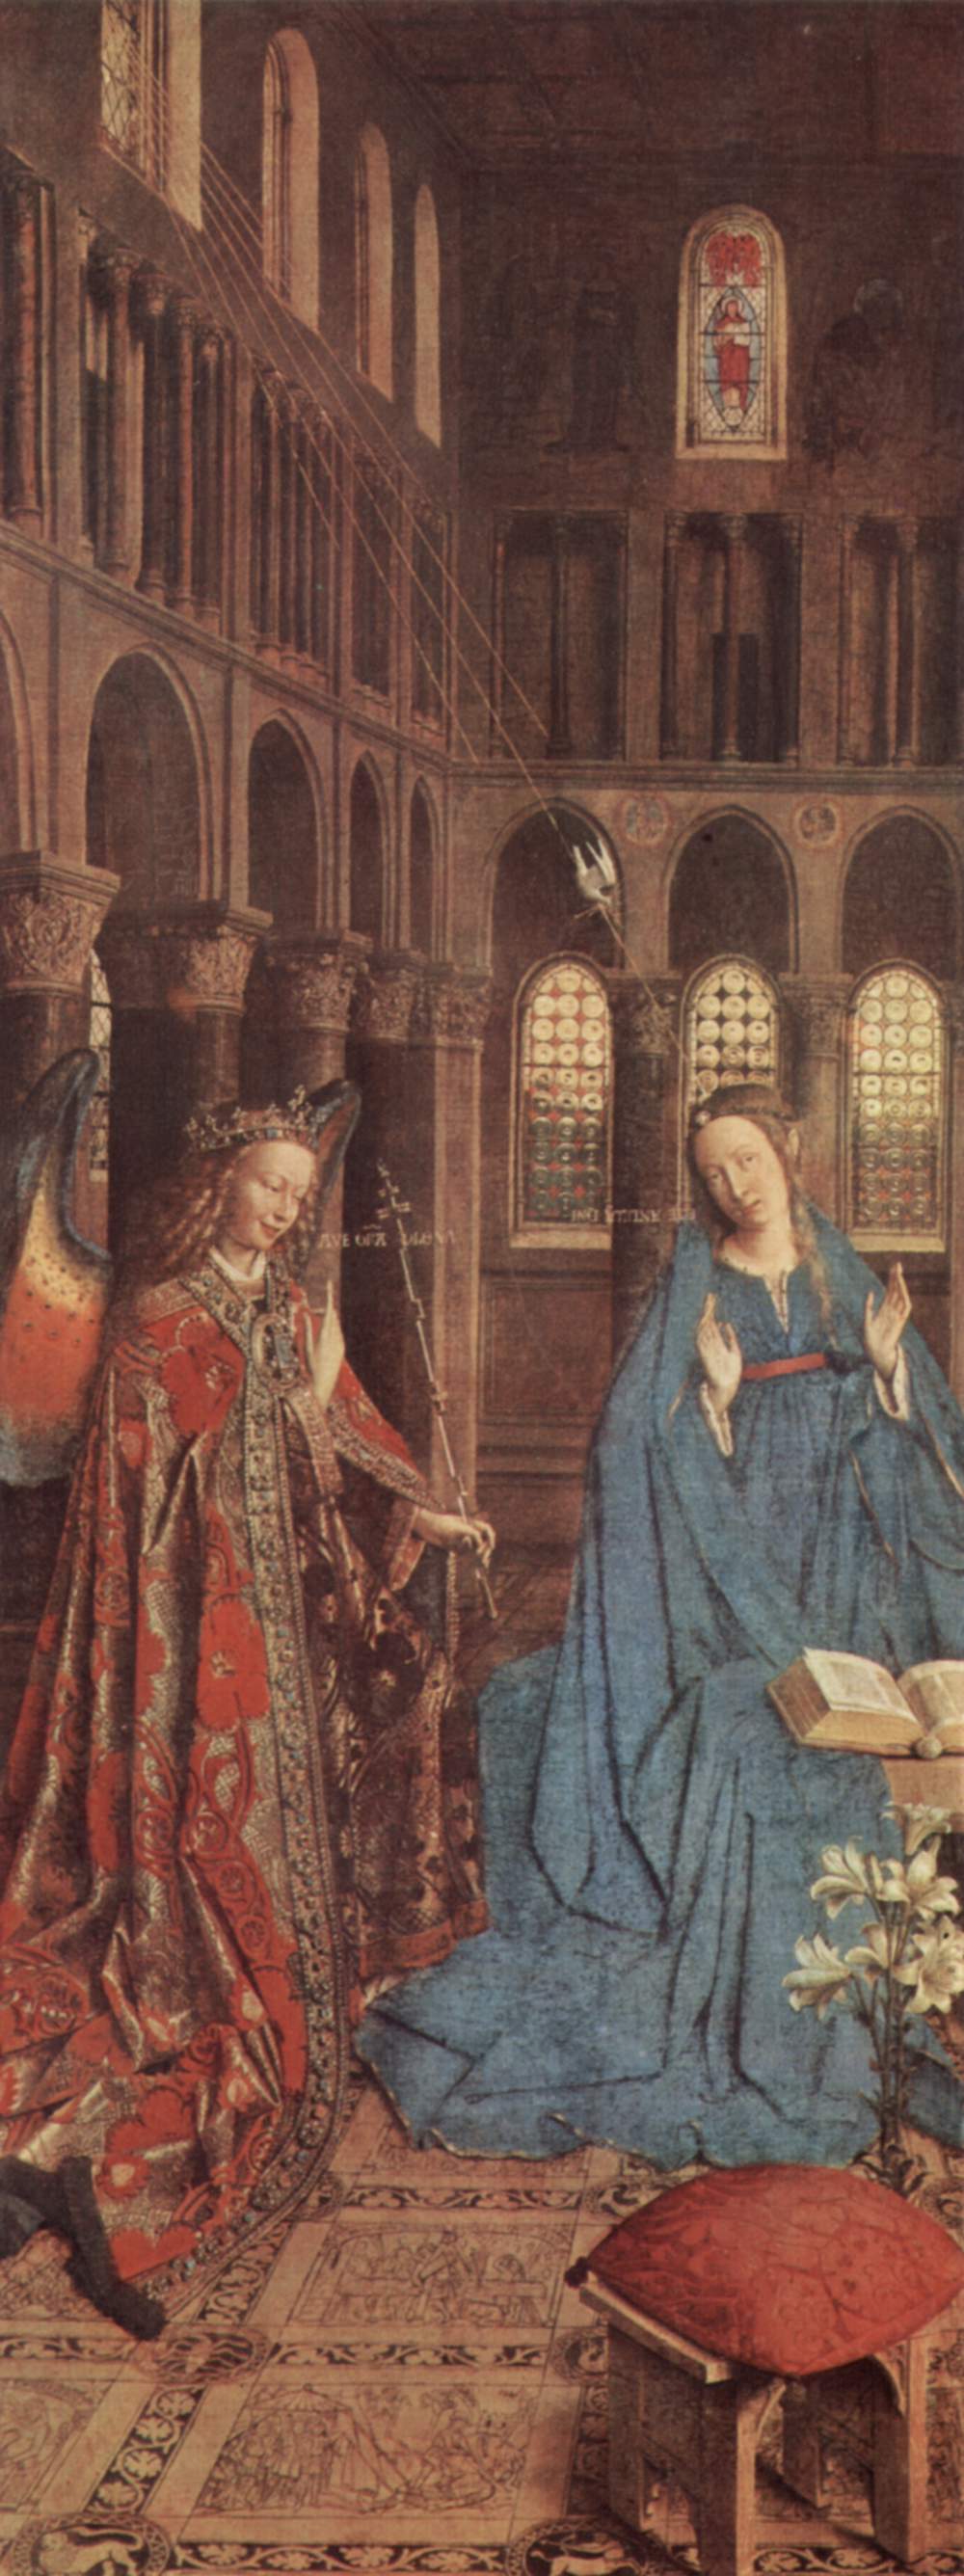 The Annunciation - Jan van Eyck - WikiArt.org - encyclopedia of visual arts